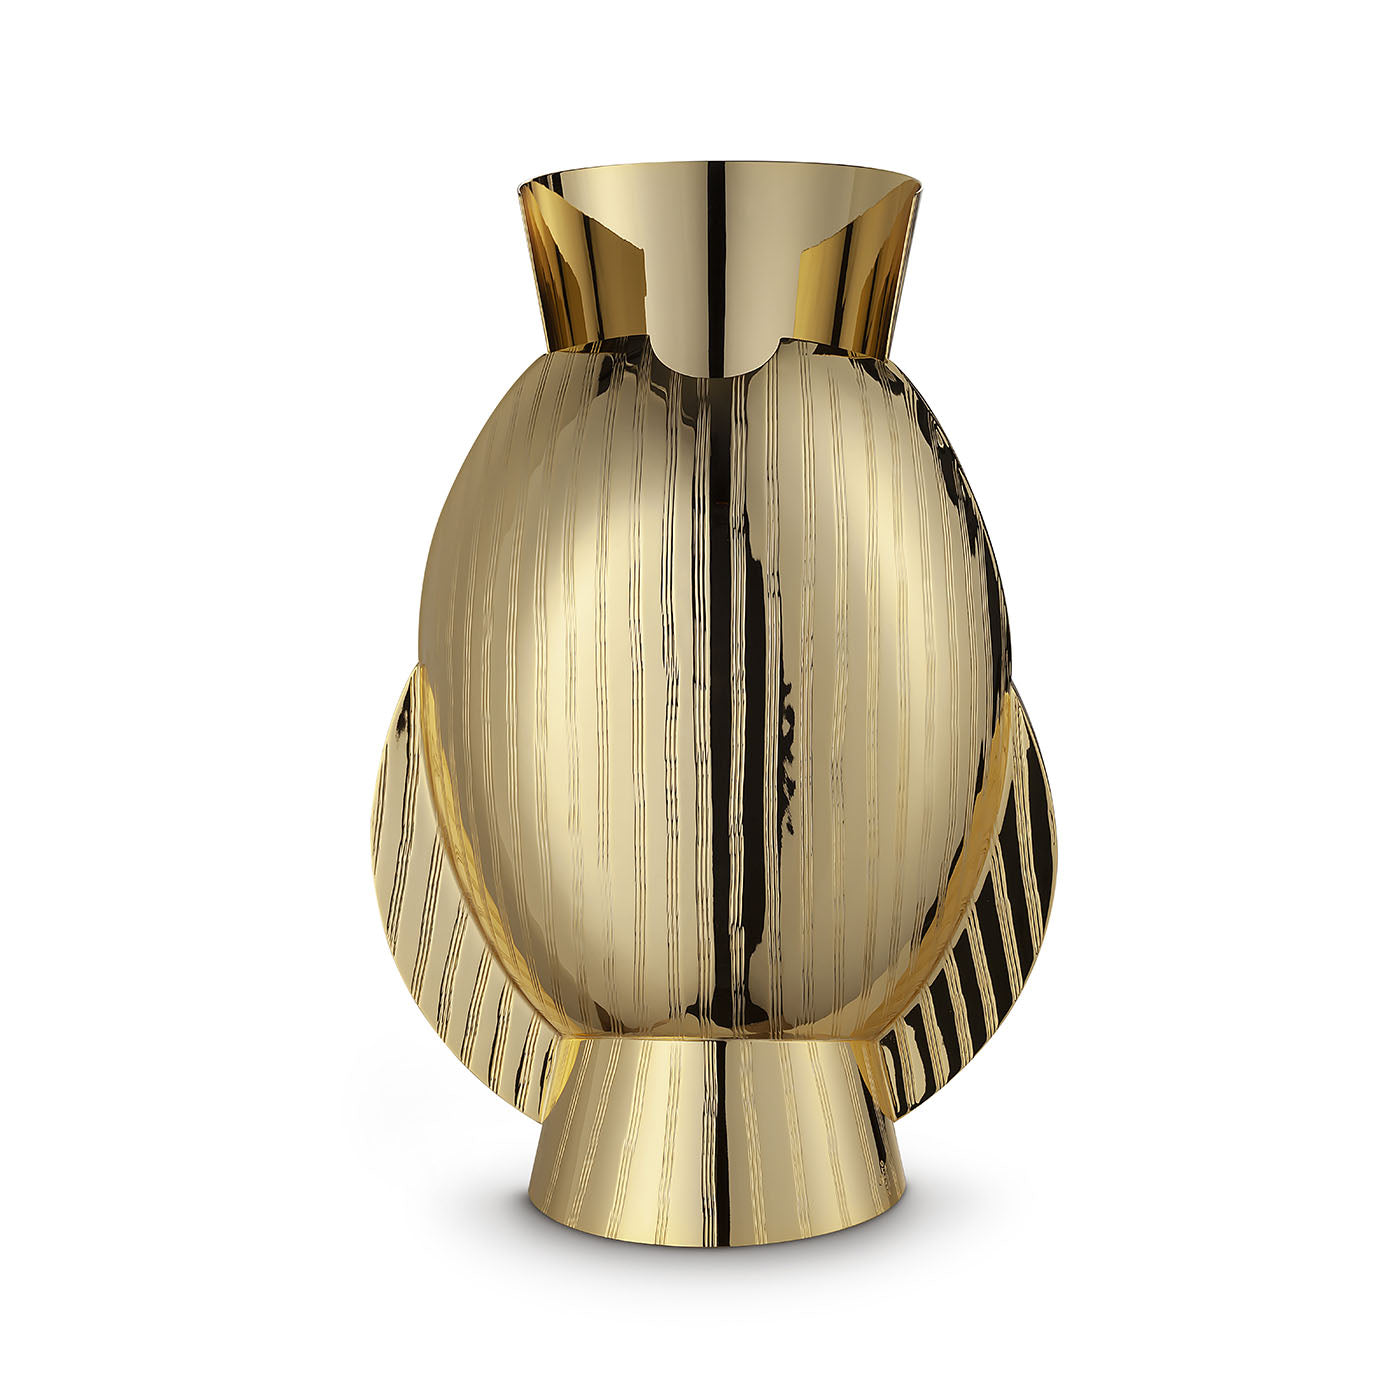 Lumaca Ridged Golden Vase - Alternative view 3